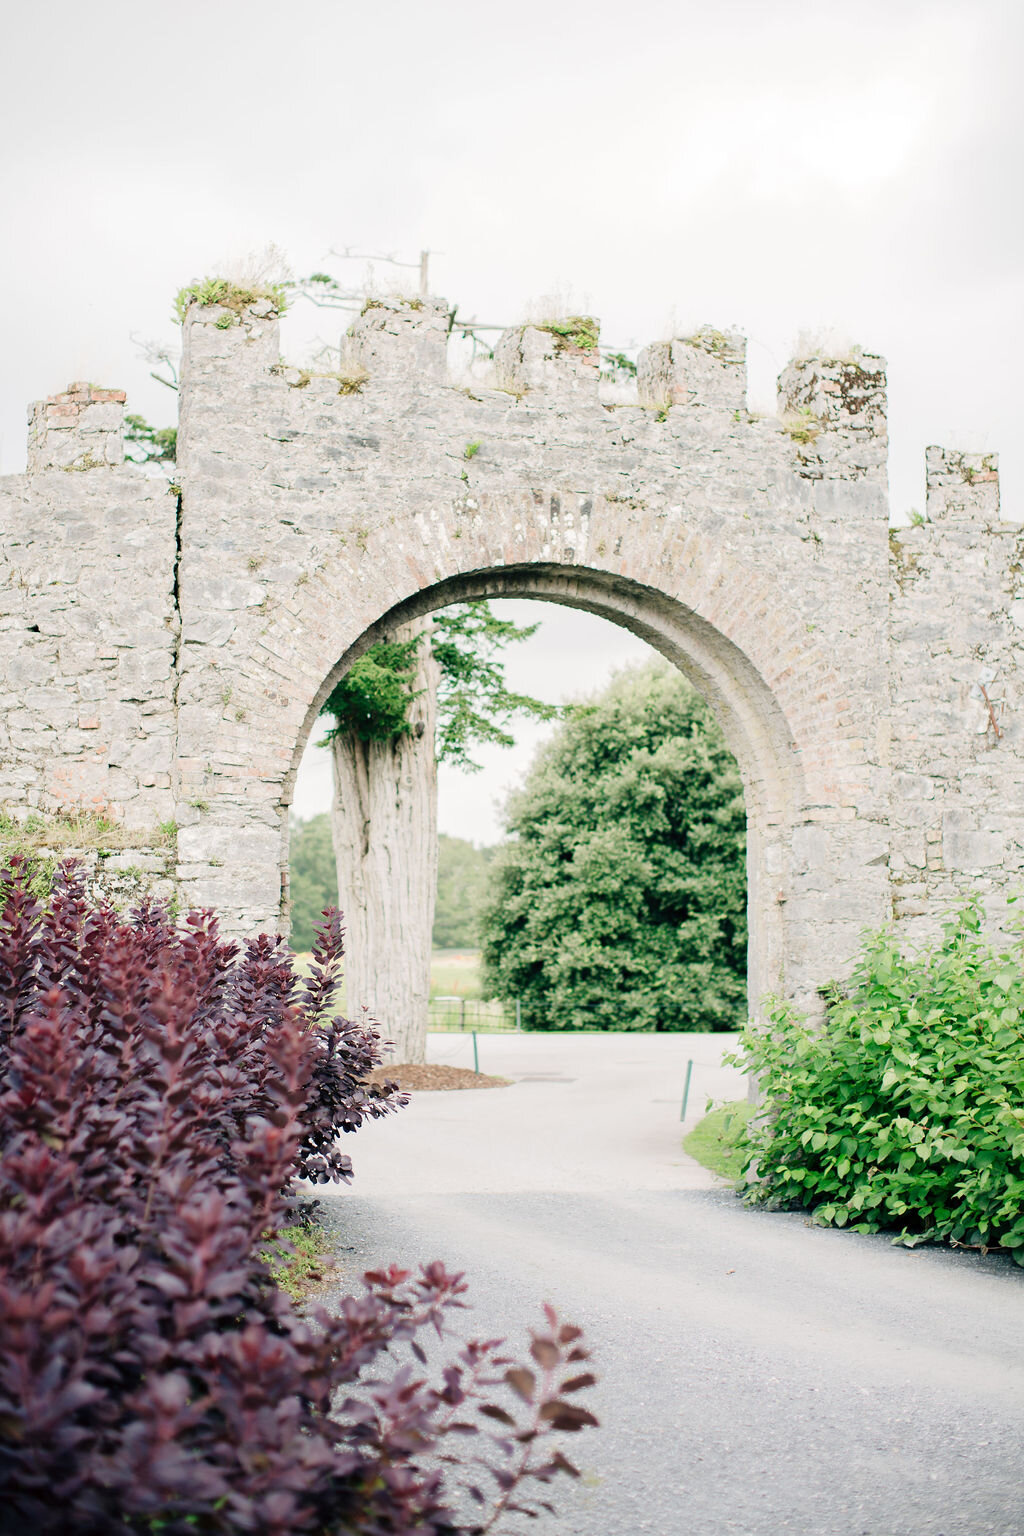  castlemartyr real wedding by Niamh Smith in cork Ireland 